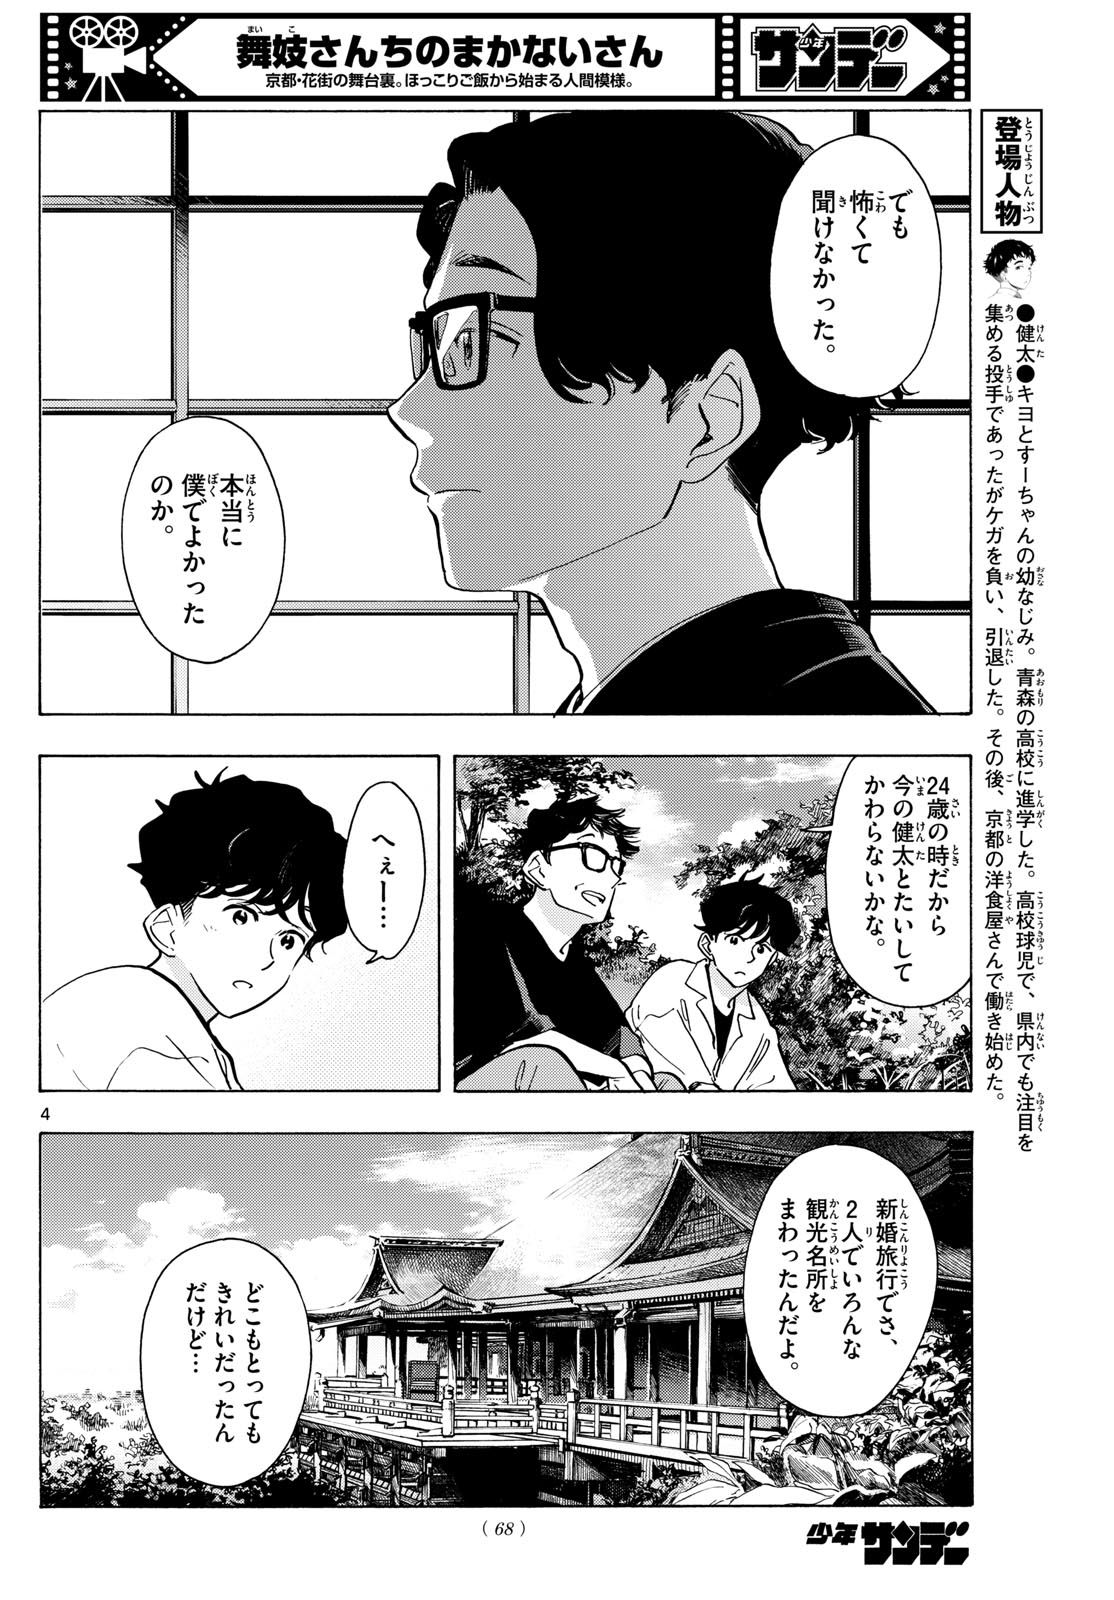 Maiko-san Chi no Makanai-san - Chapter 307 - Page 4